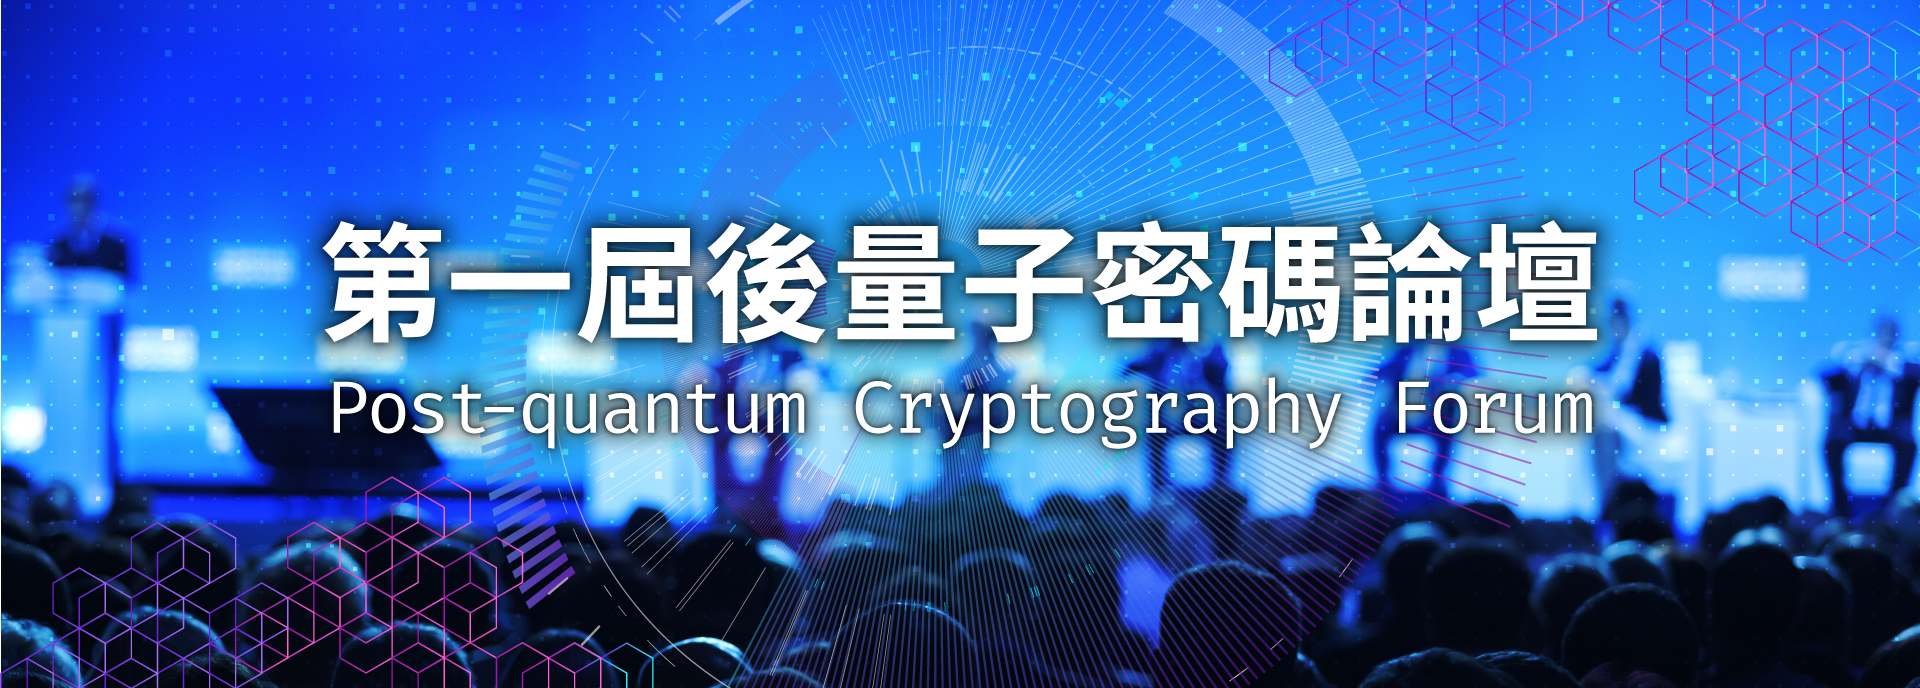 第一屆後量子密碼論壇 1st Post-quantum Cryptography Forum